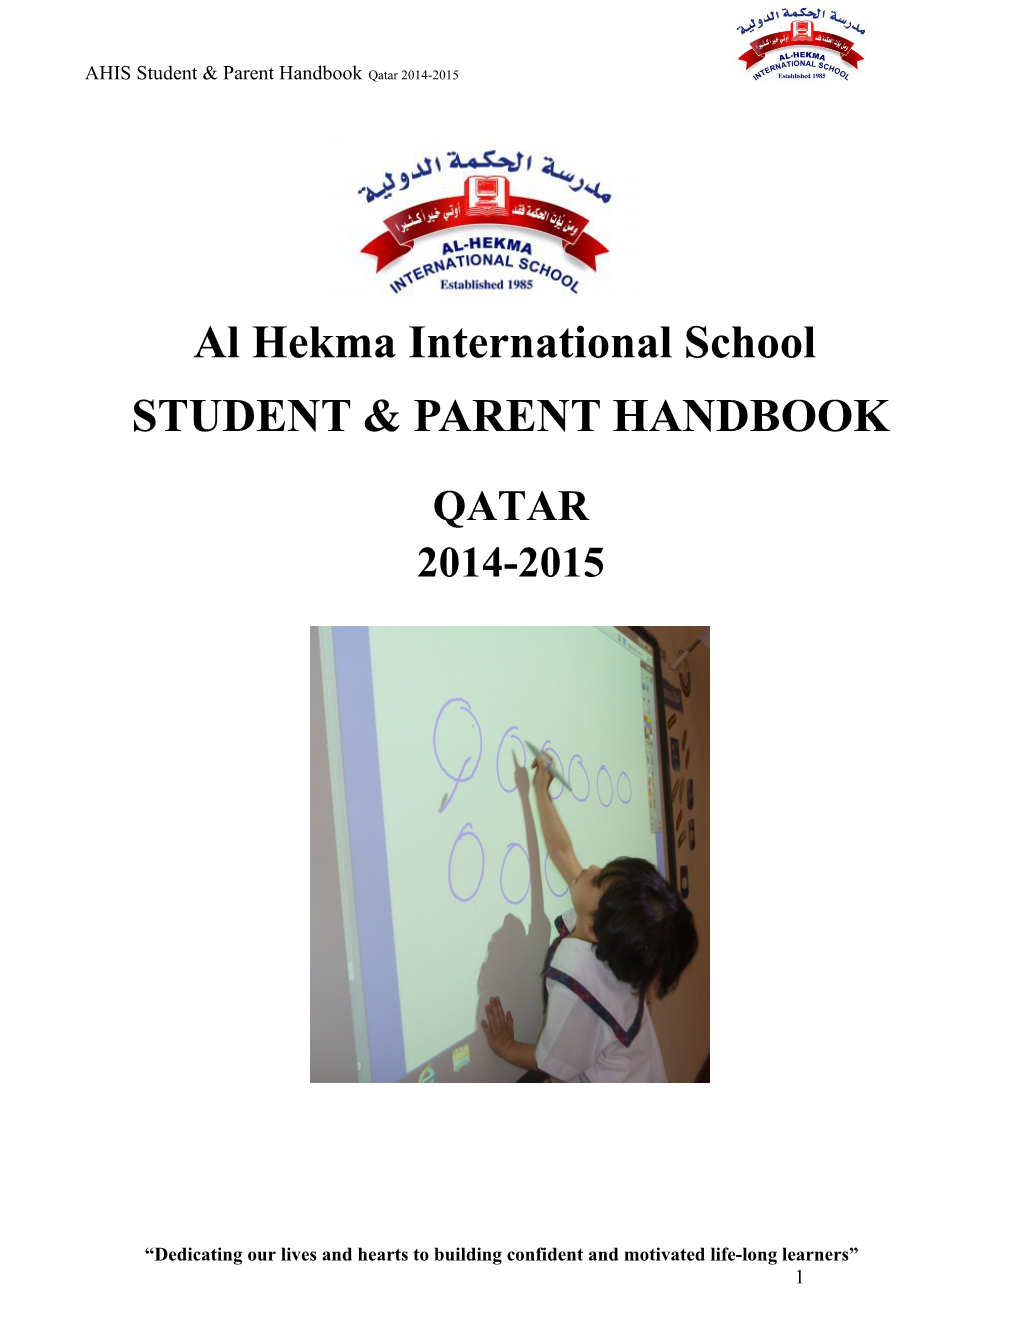 Al Hekma International School HANDBOOK